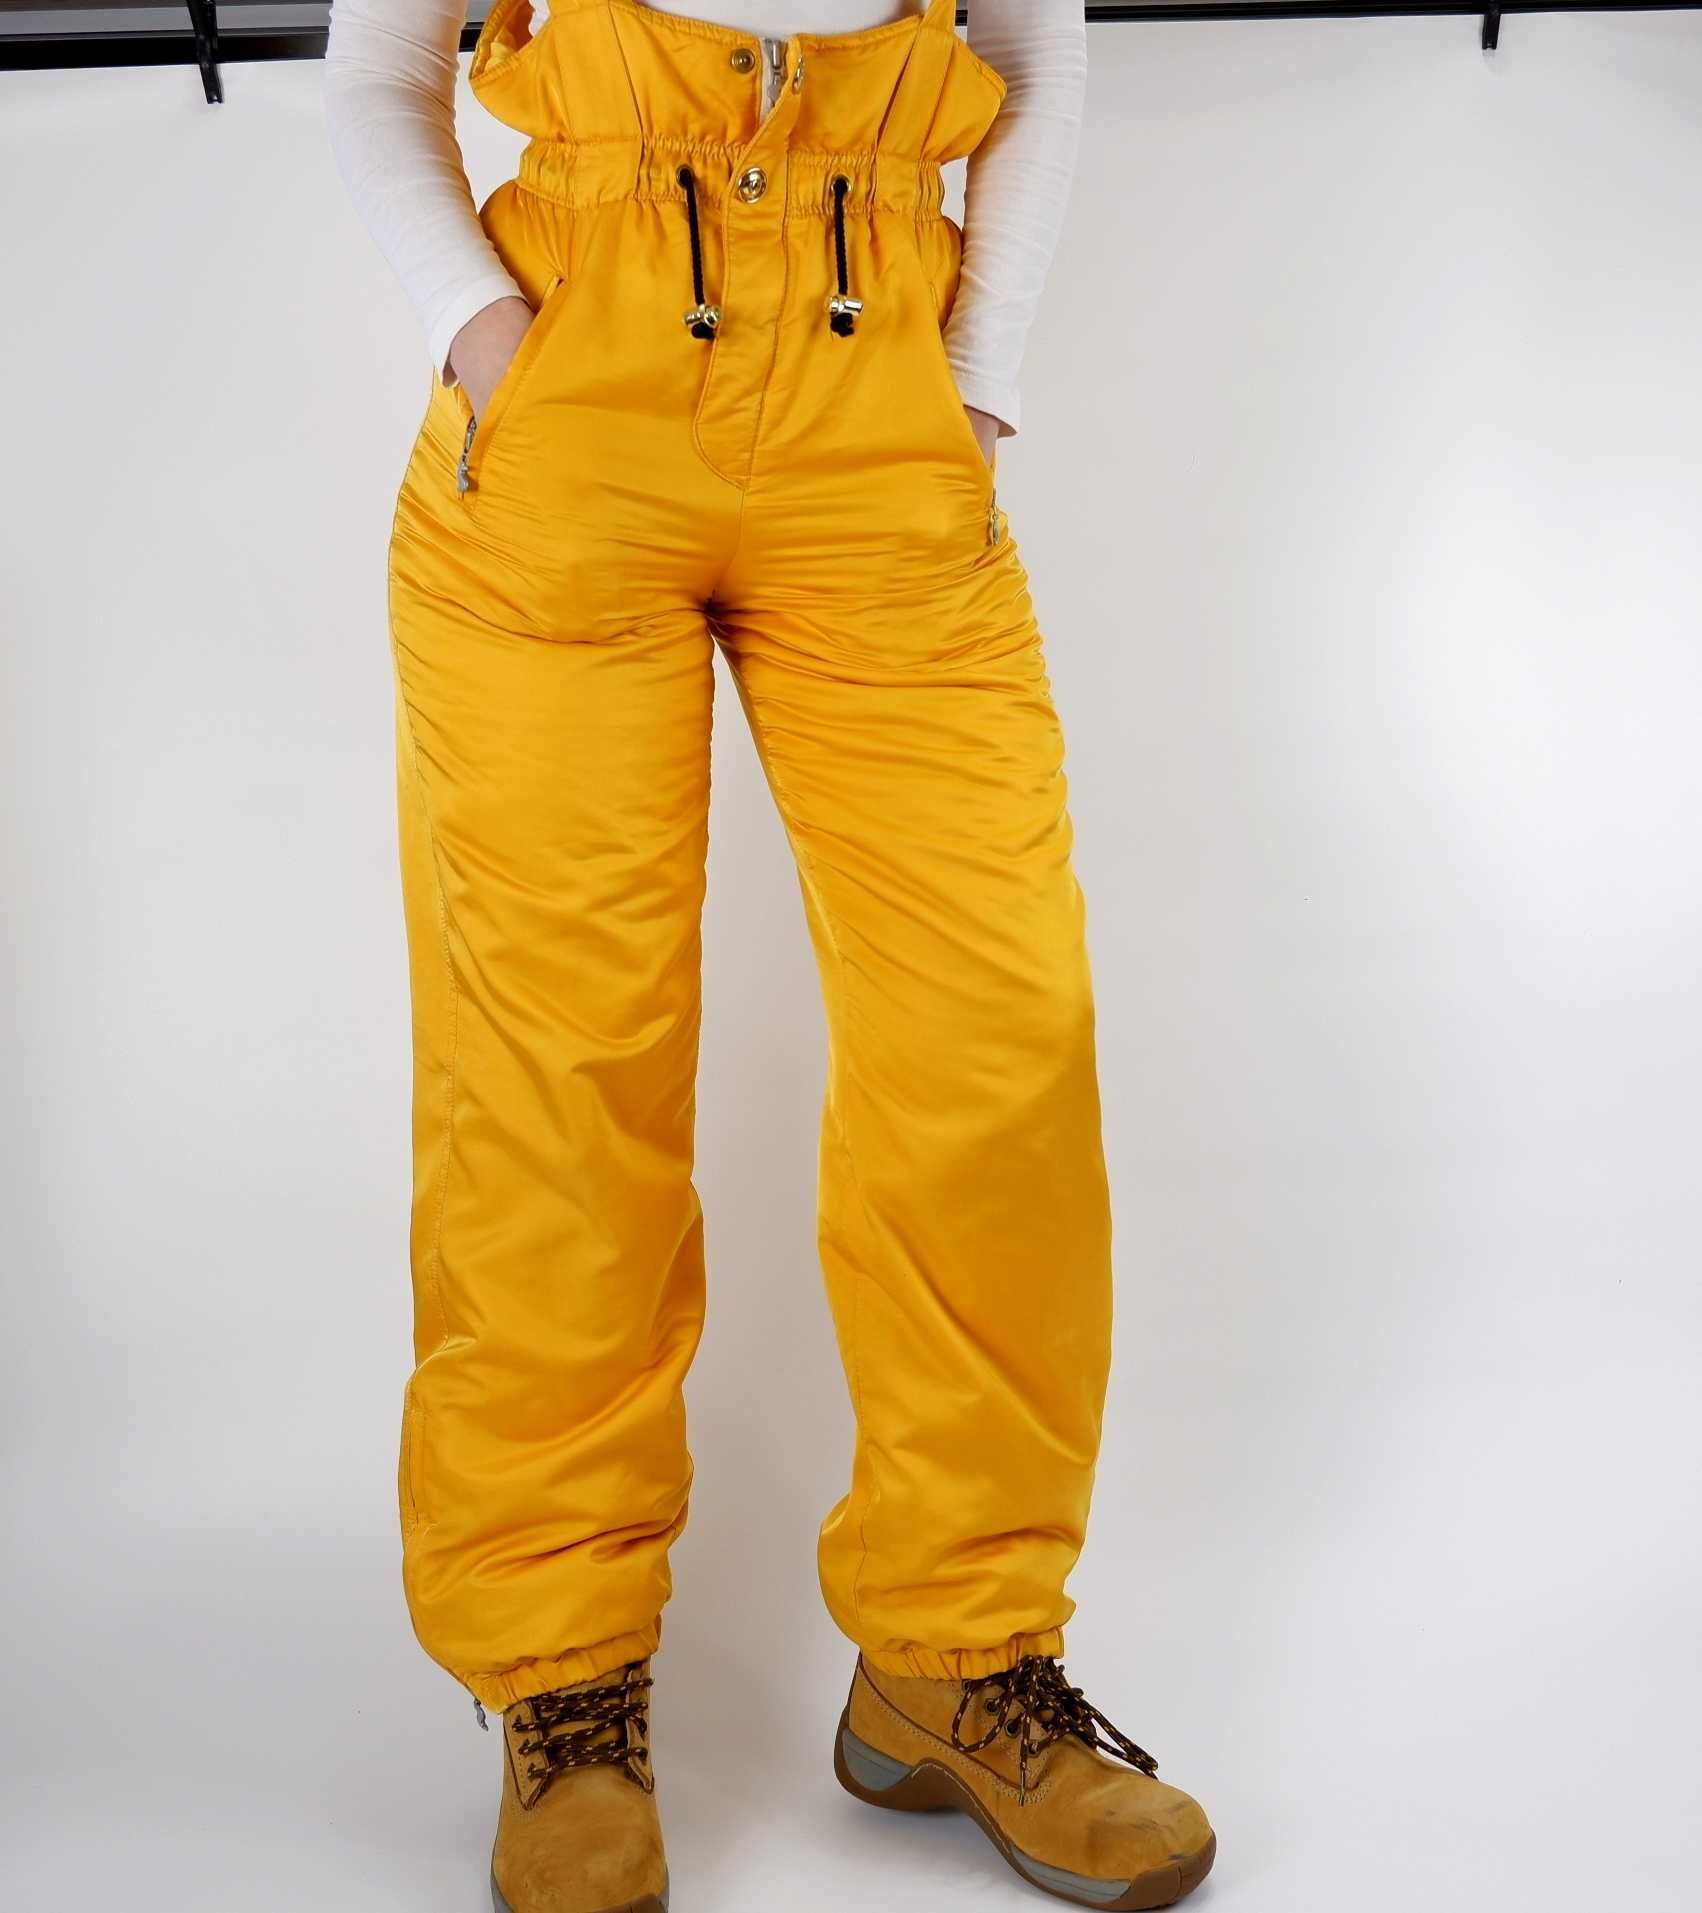 Желтый зимний теплый яркий комбинезон штаны женский S Австрия Sportalm